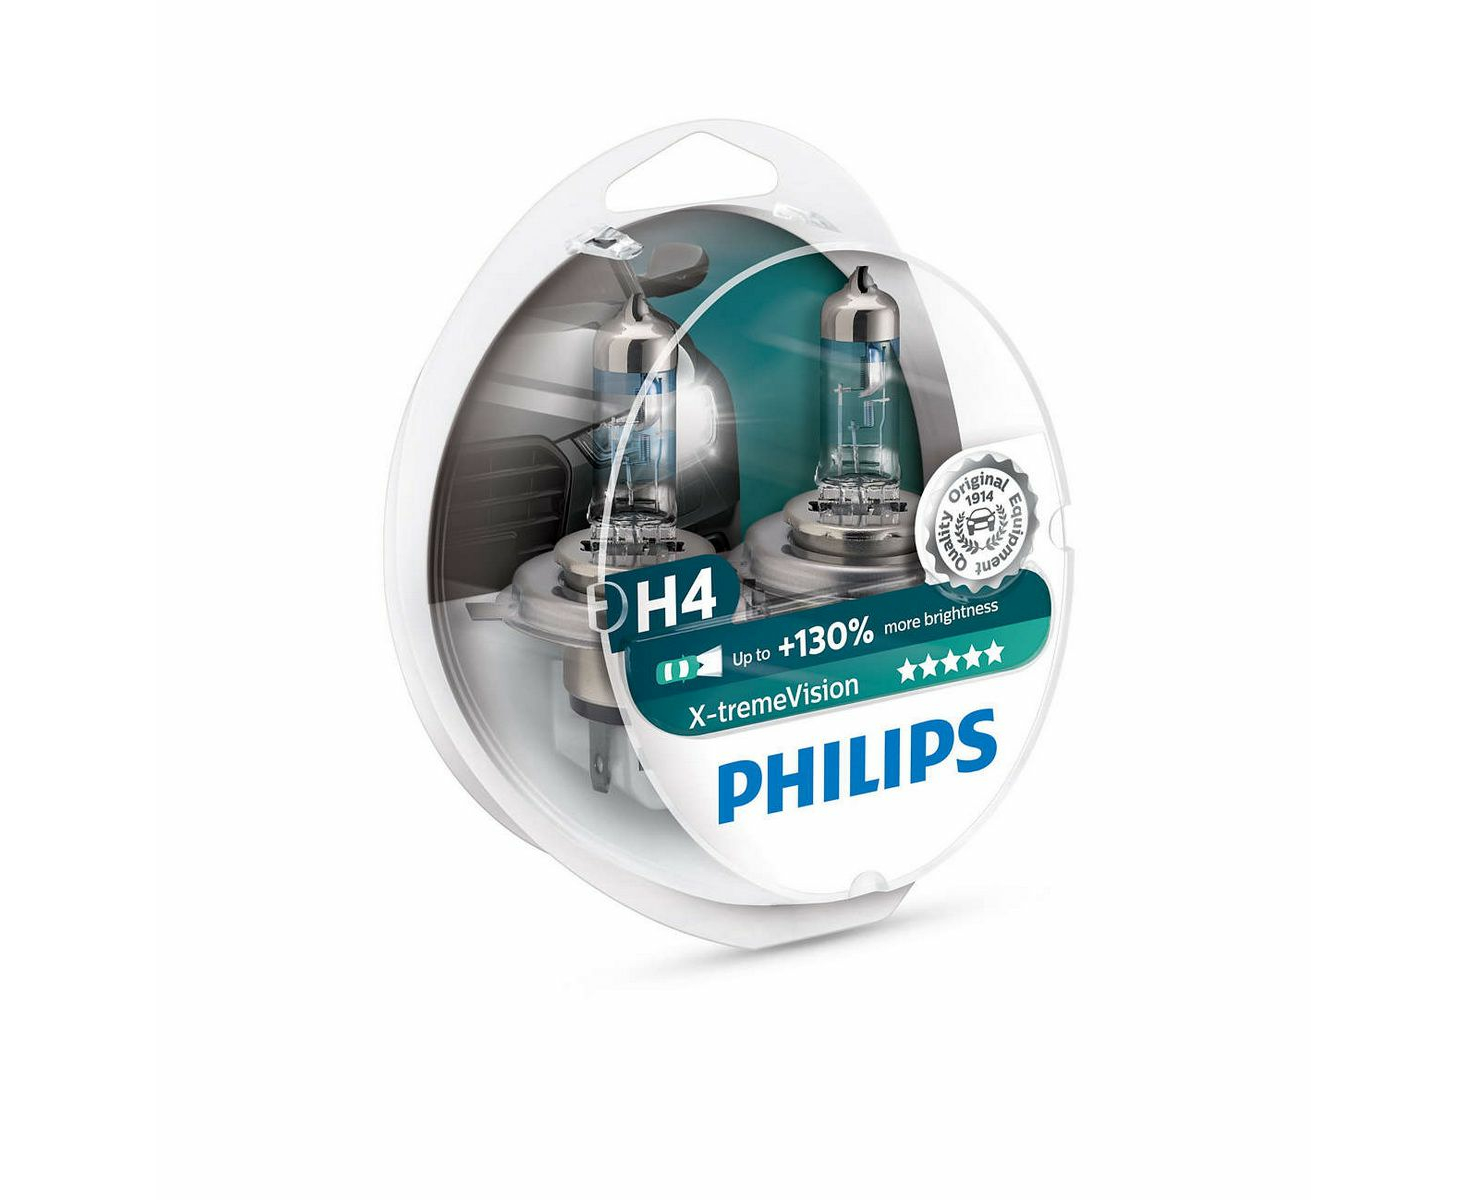 Филипс 130. Philips 12342xv+ s2. Лампы н7 Филипс экстрим Вижн. Philips x-TREMEVISION h7. Филипс h7 +130.